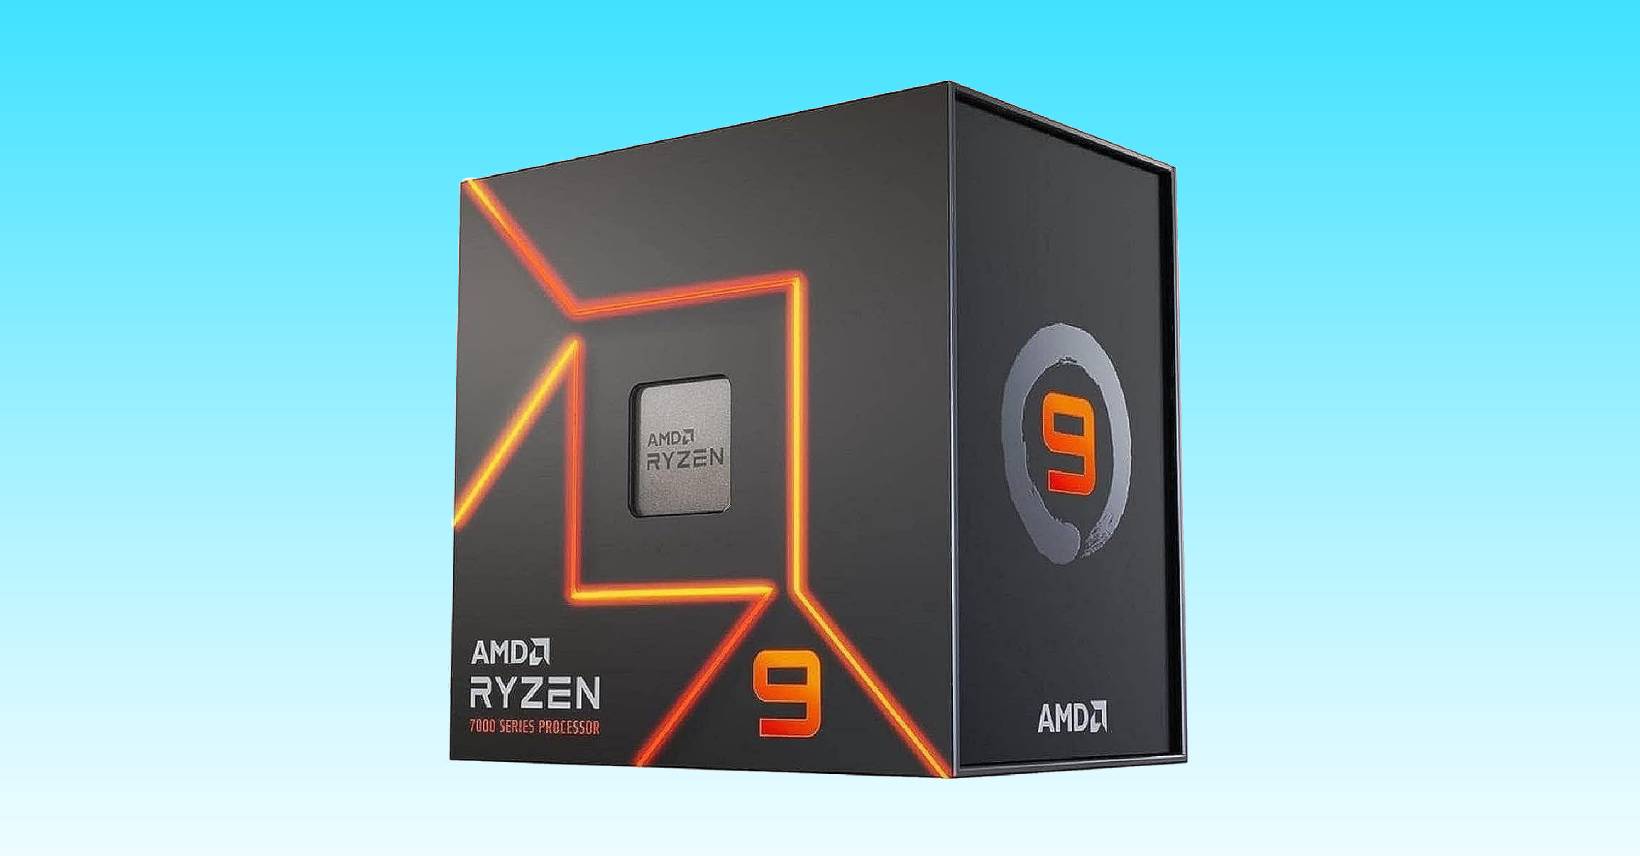 Black Friday AMD Ryzen 9 processor box.